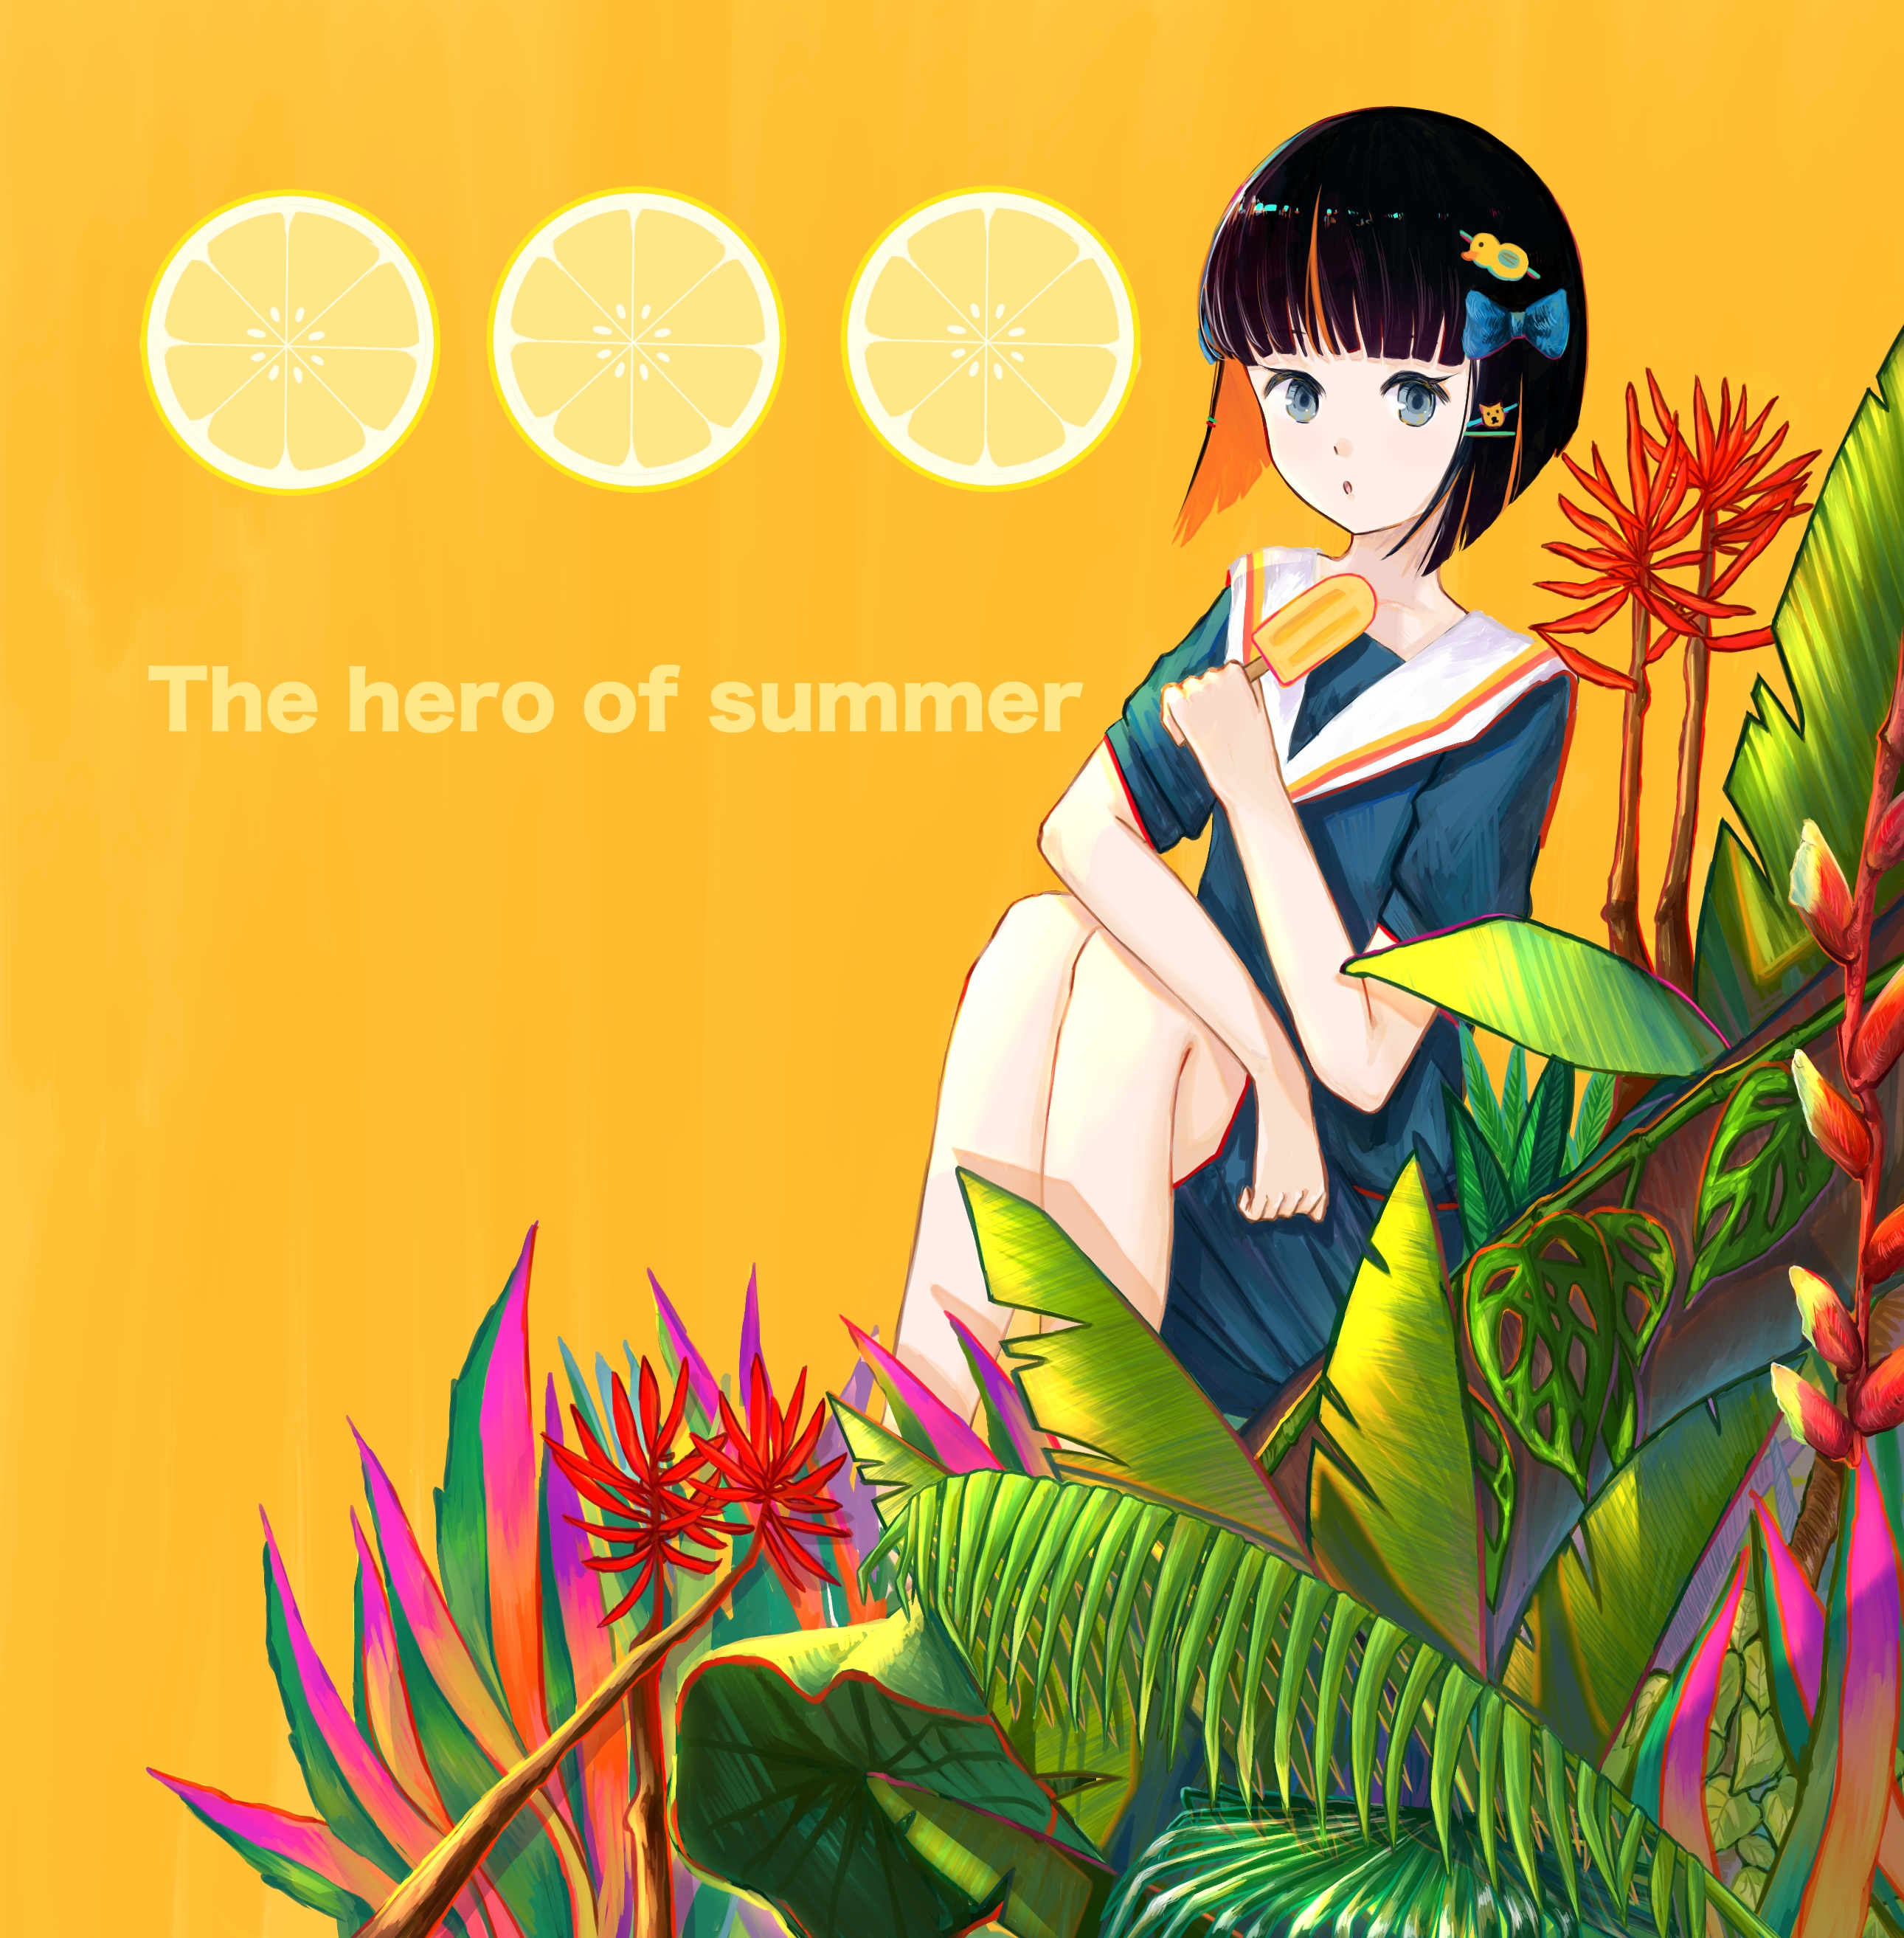 The hero of summer